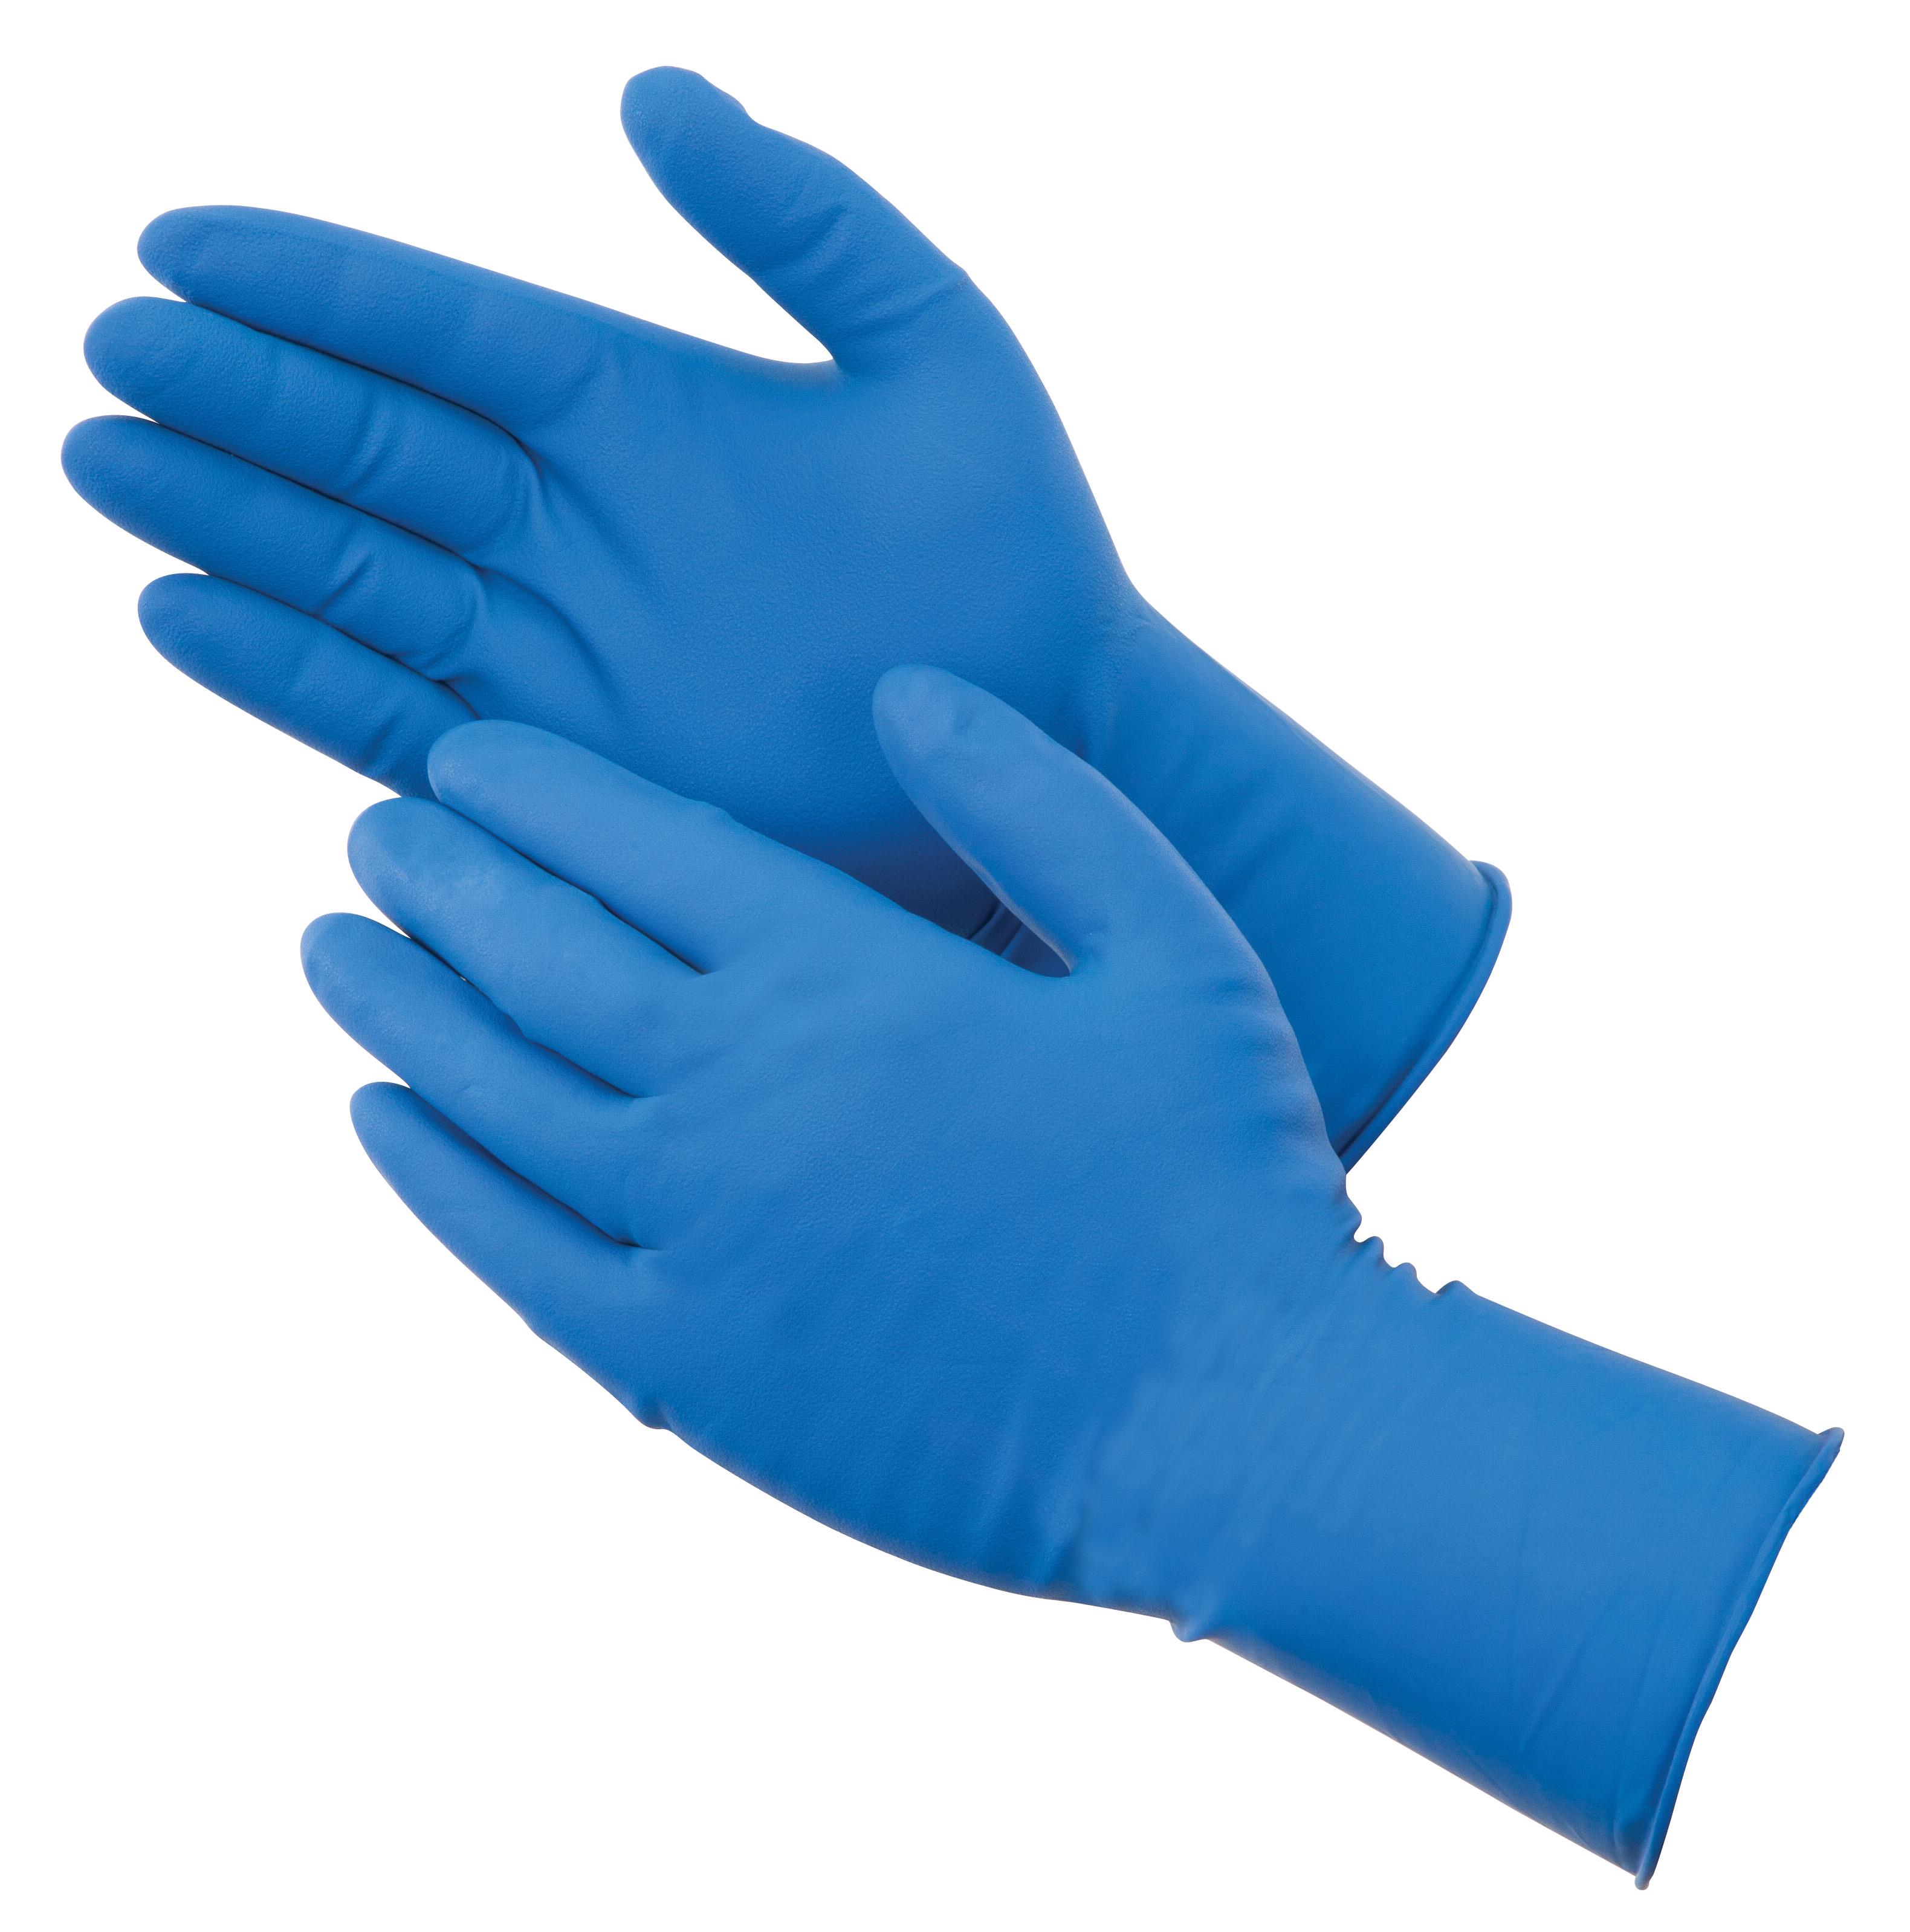 14 MIL POWDER FREE BLUE LATEX EXAM 50/BX - Disposable Gloves